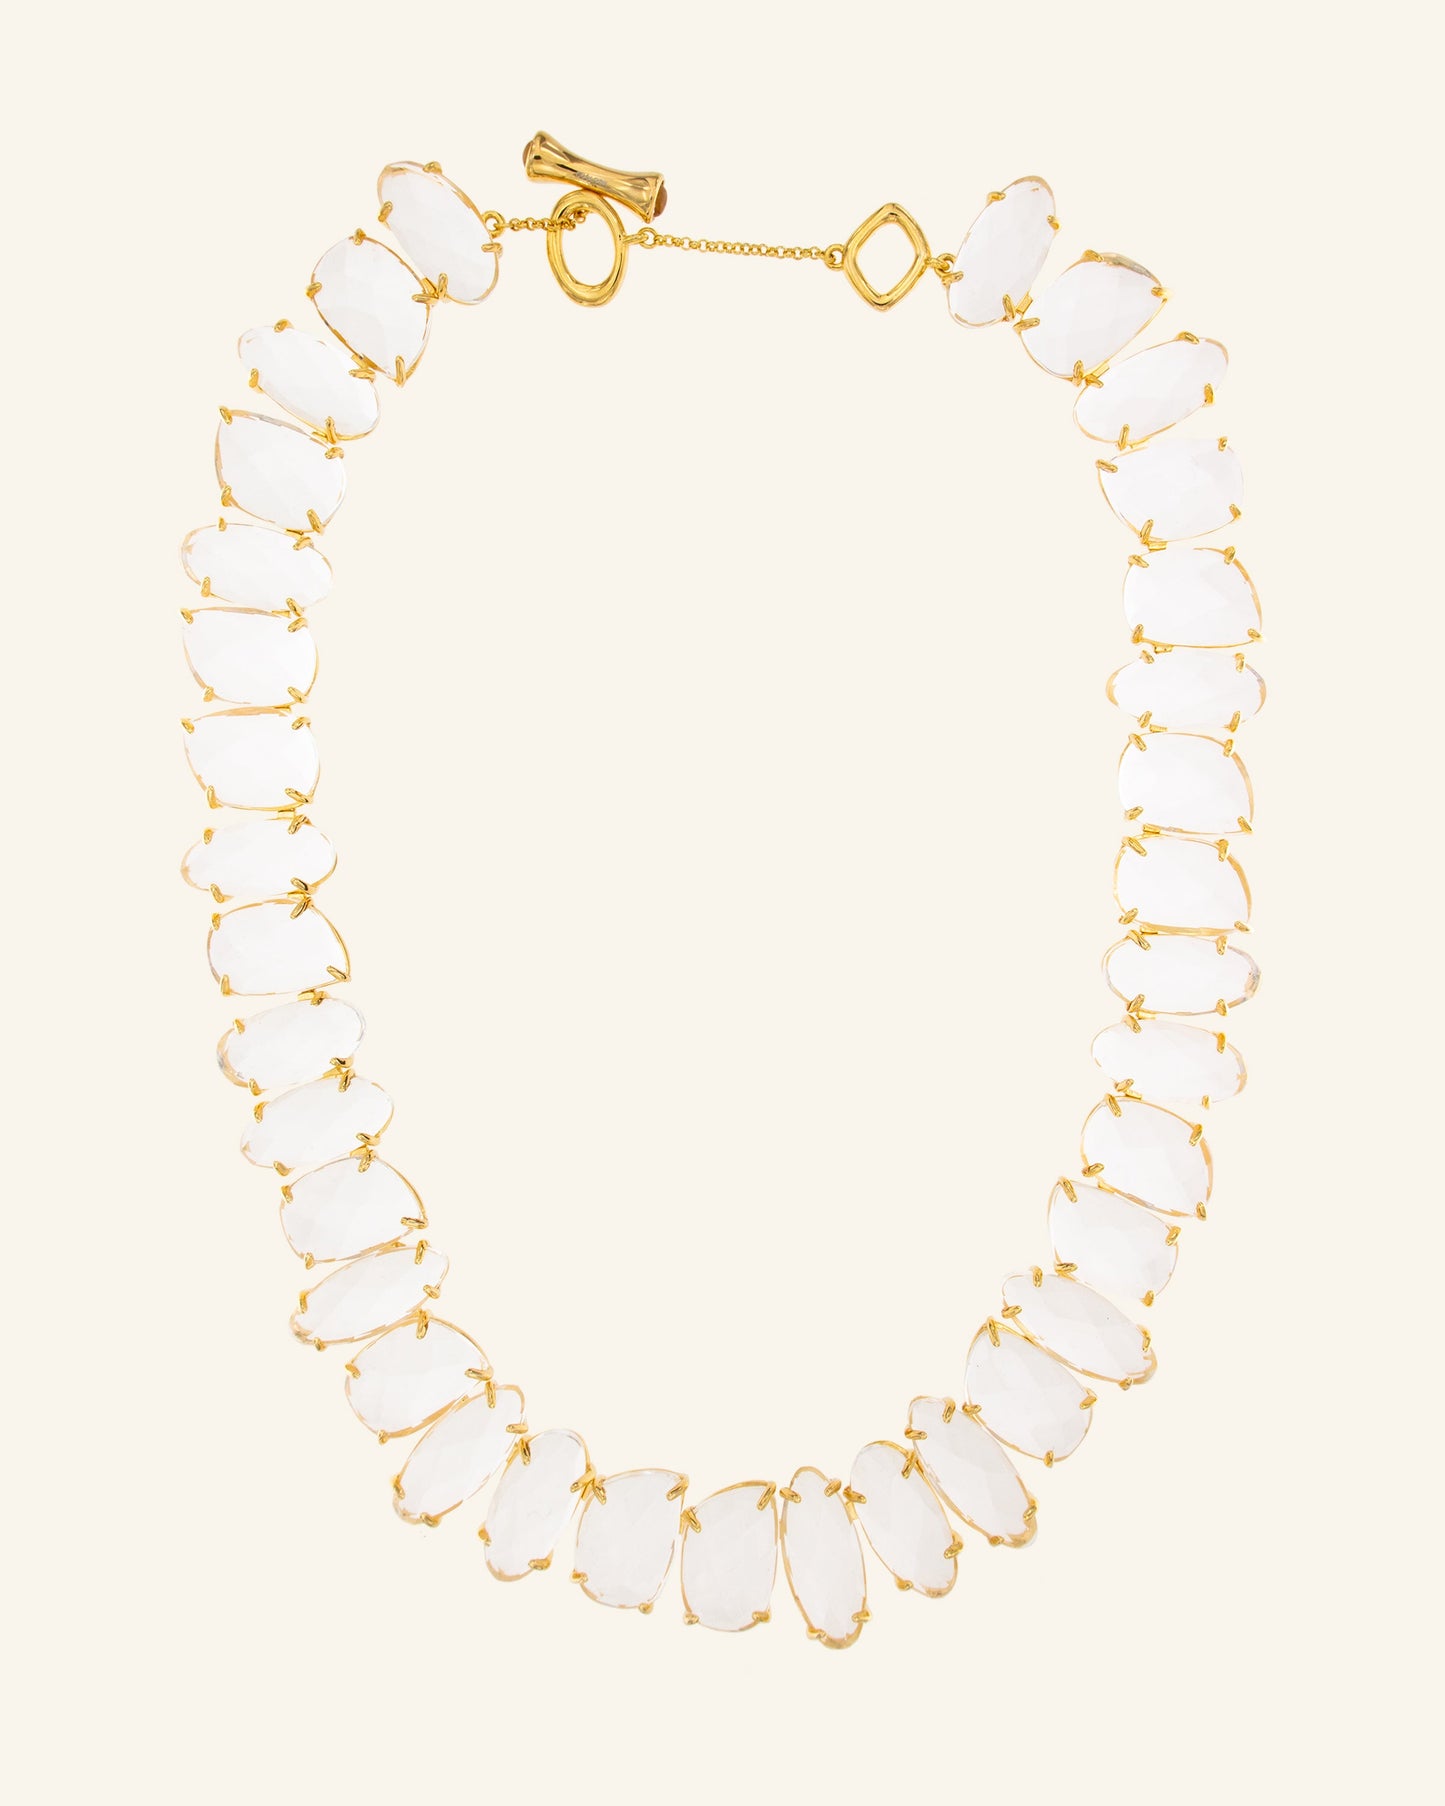 Erebus necklace with colorless quartz